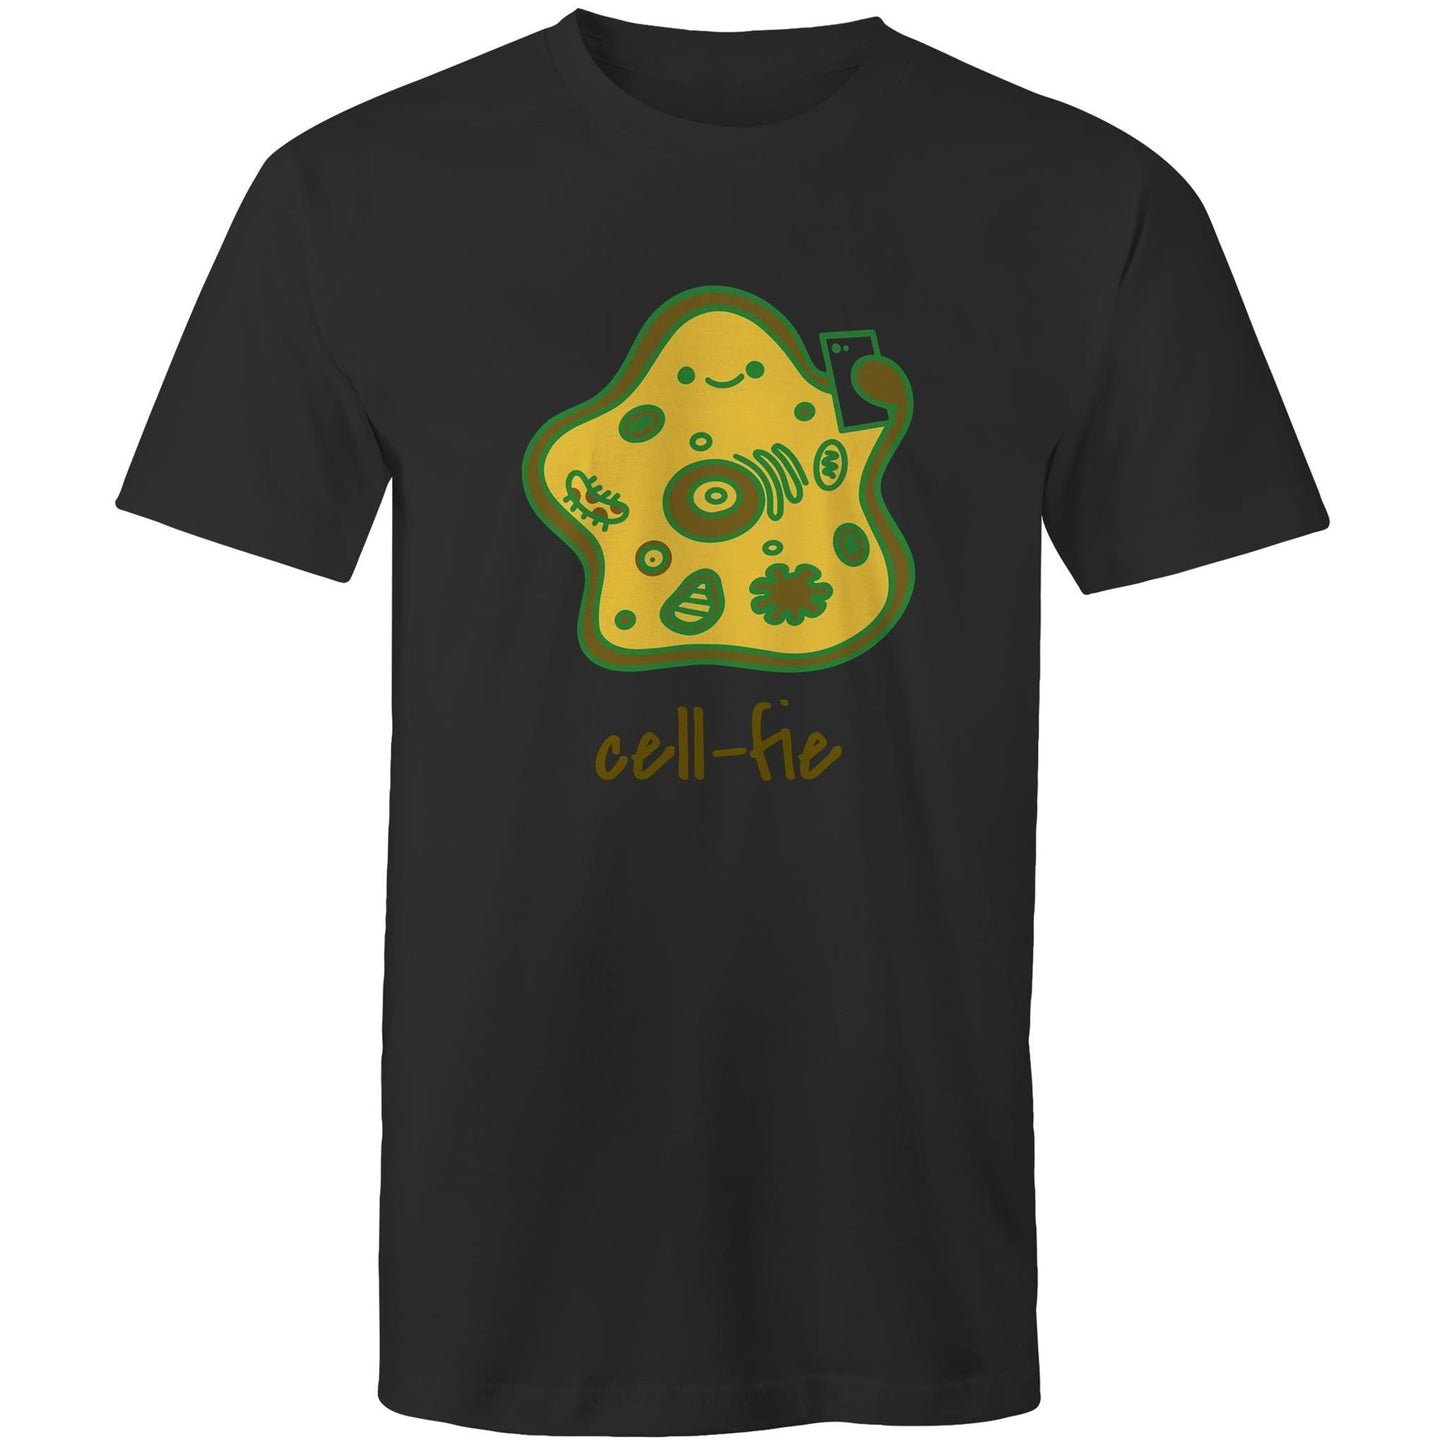 Cell-fie - Mens T-Shirt Black Mens T-shirt Science